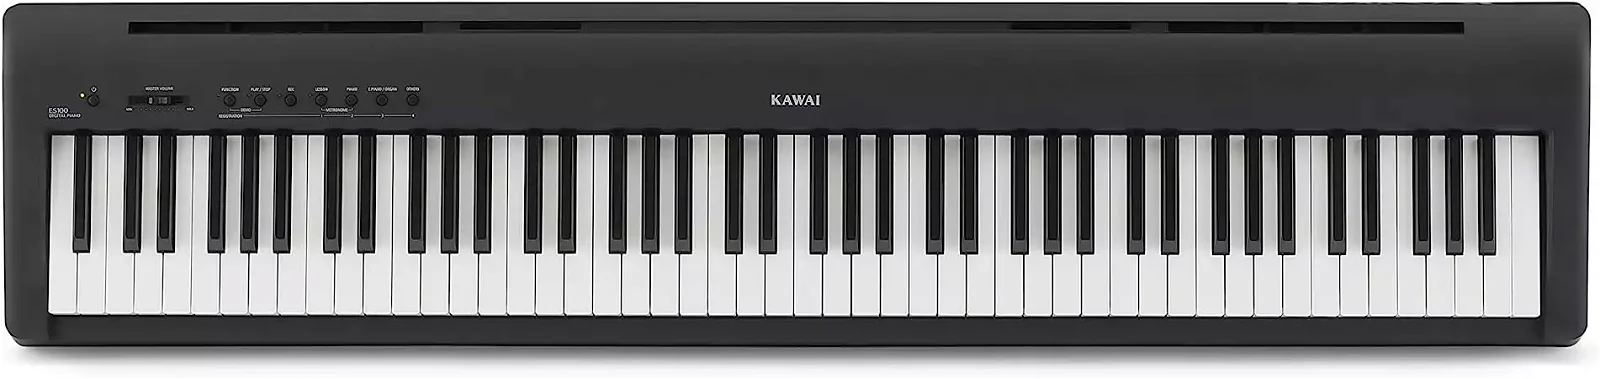 Kawai ES100 Digital Piano